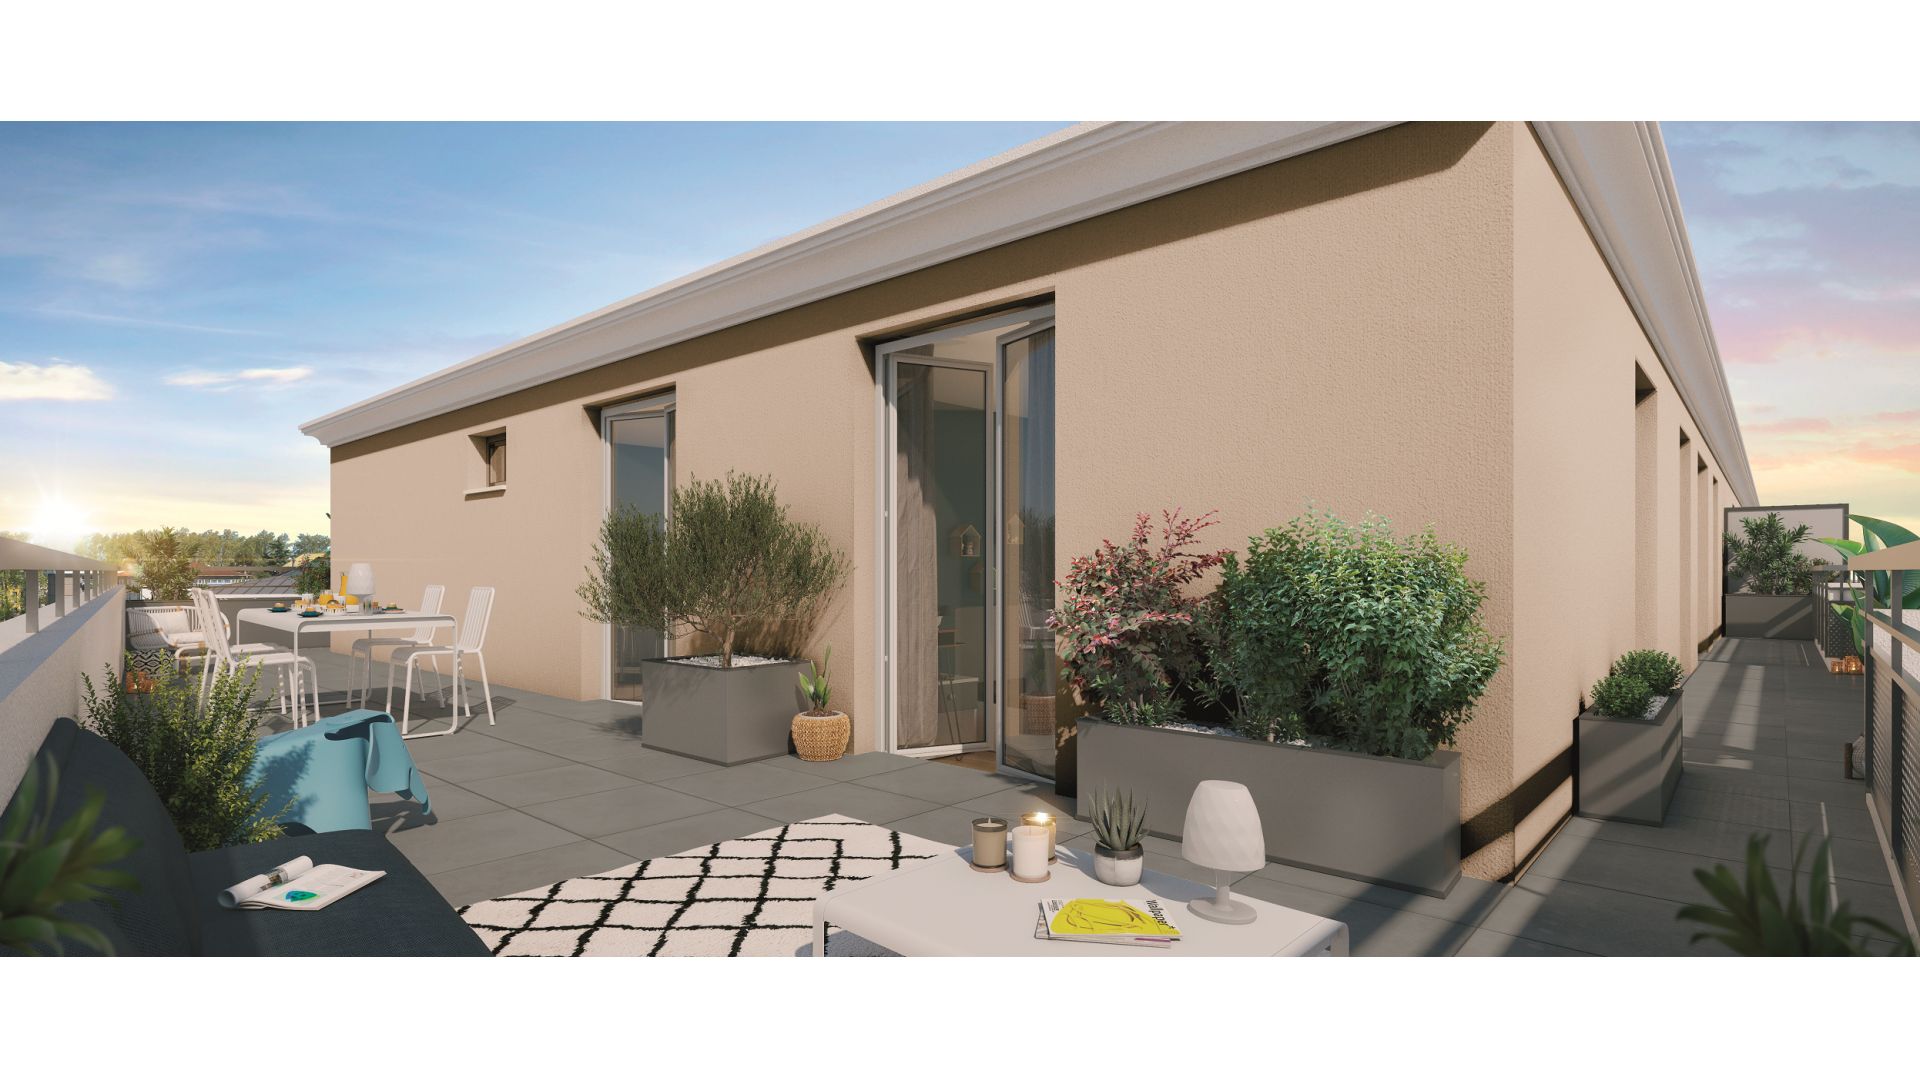 Greencity immobilier - achat appartements neufs du T1Bis au T5 - Résidence Marianne - 78680 Epone - vue terrasse